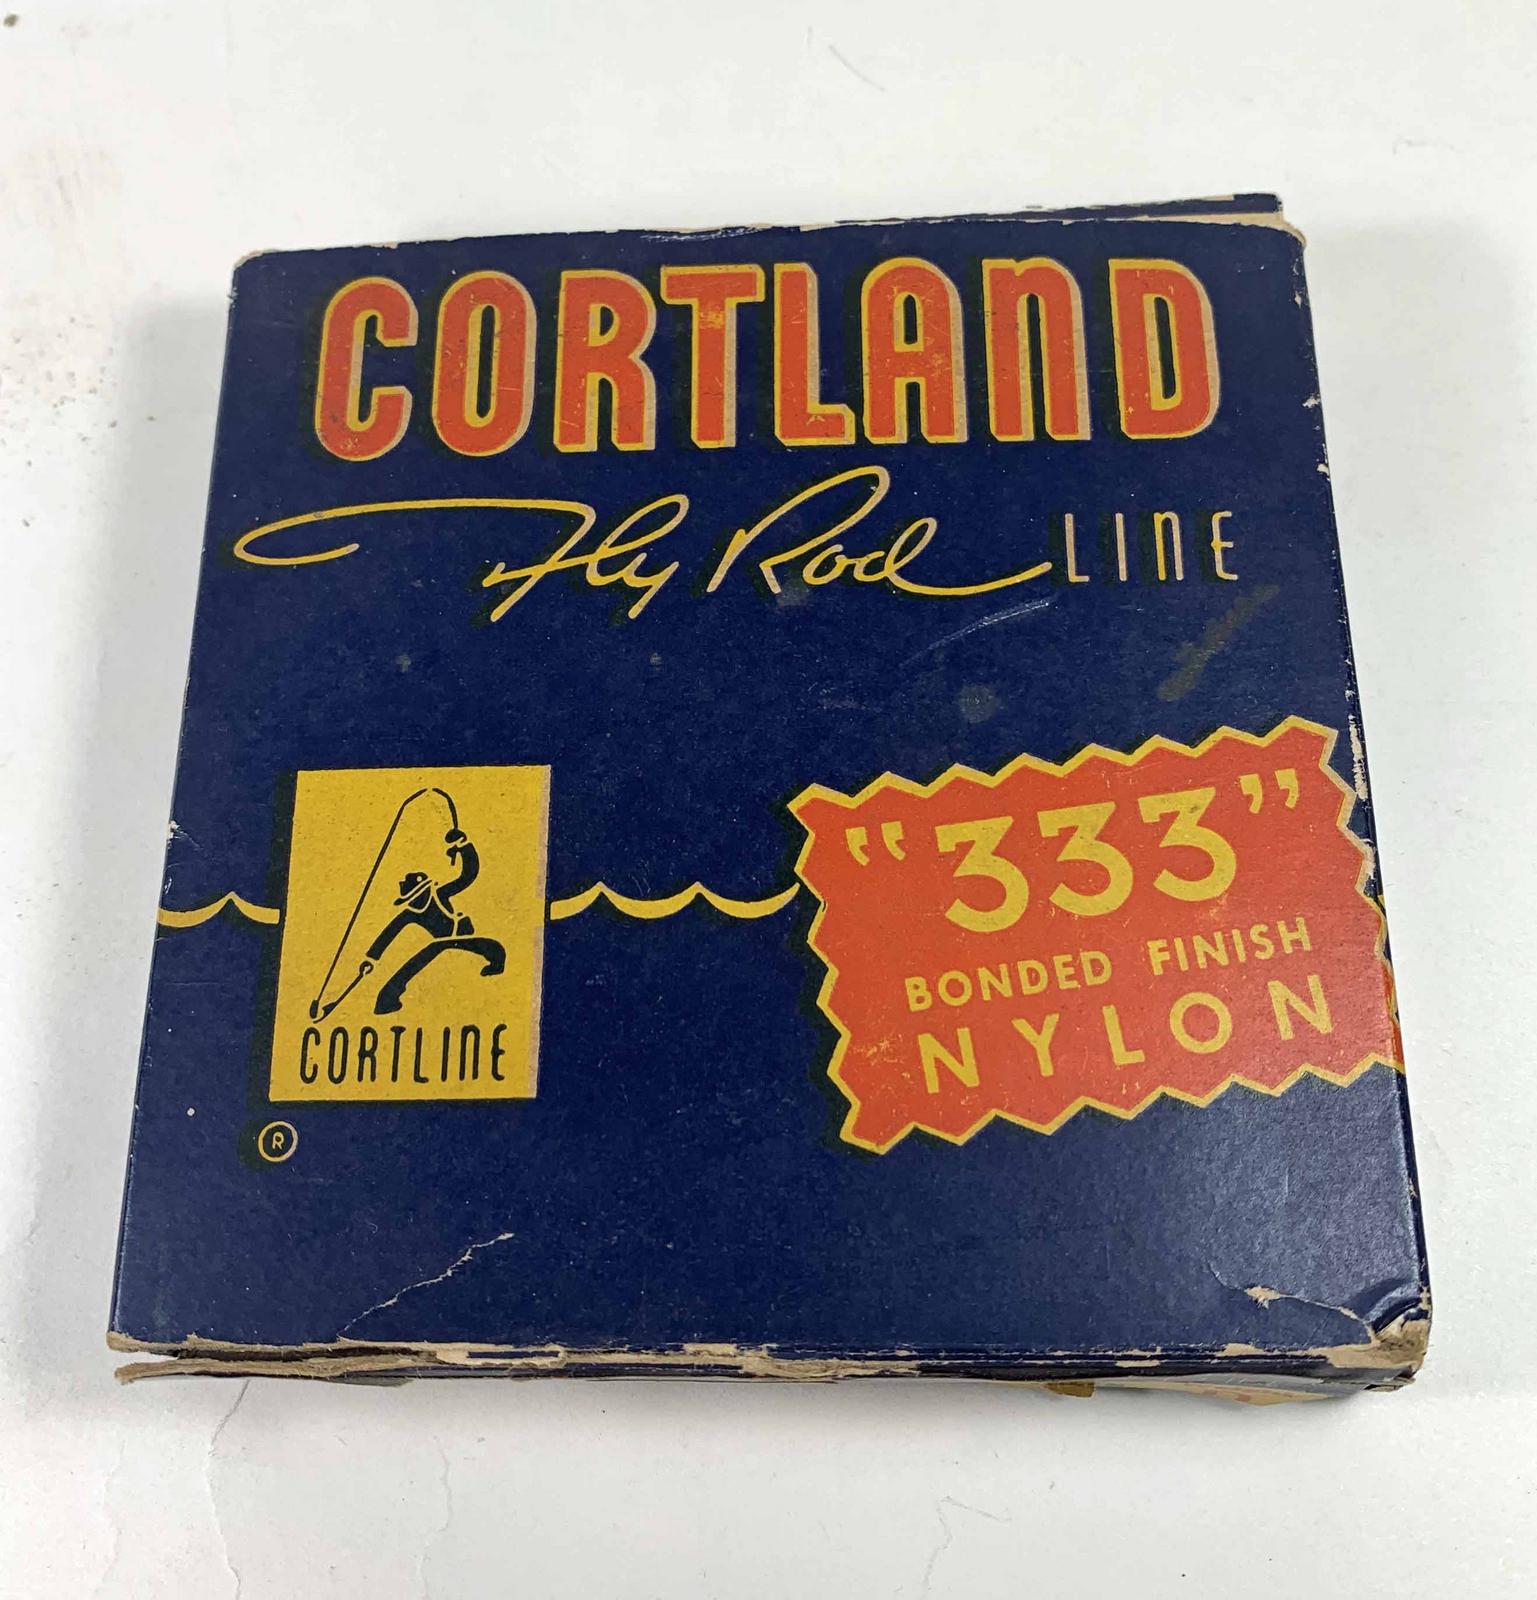 1 Vintage Box of Cortland Fly Rod Line